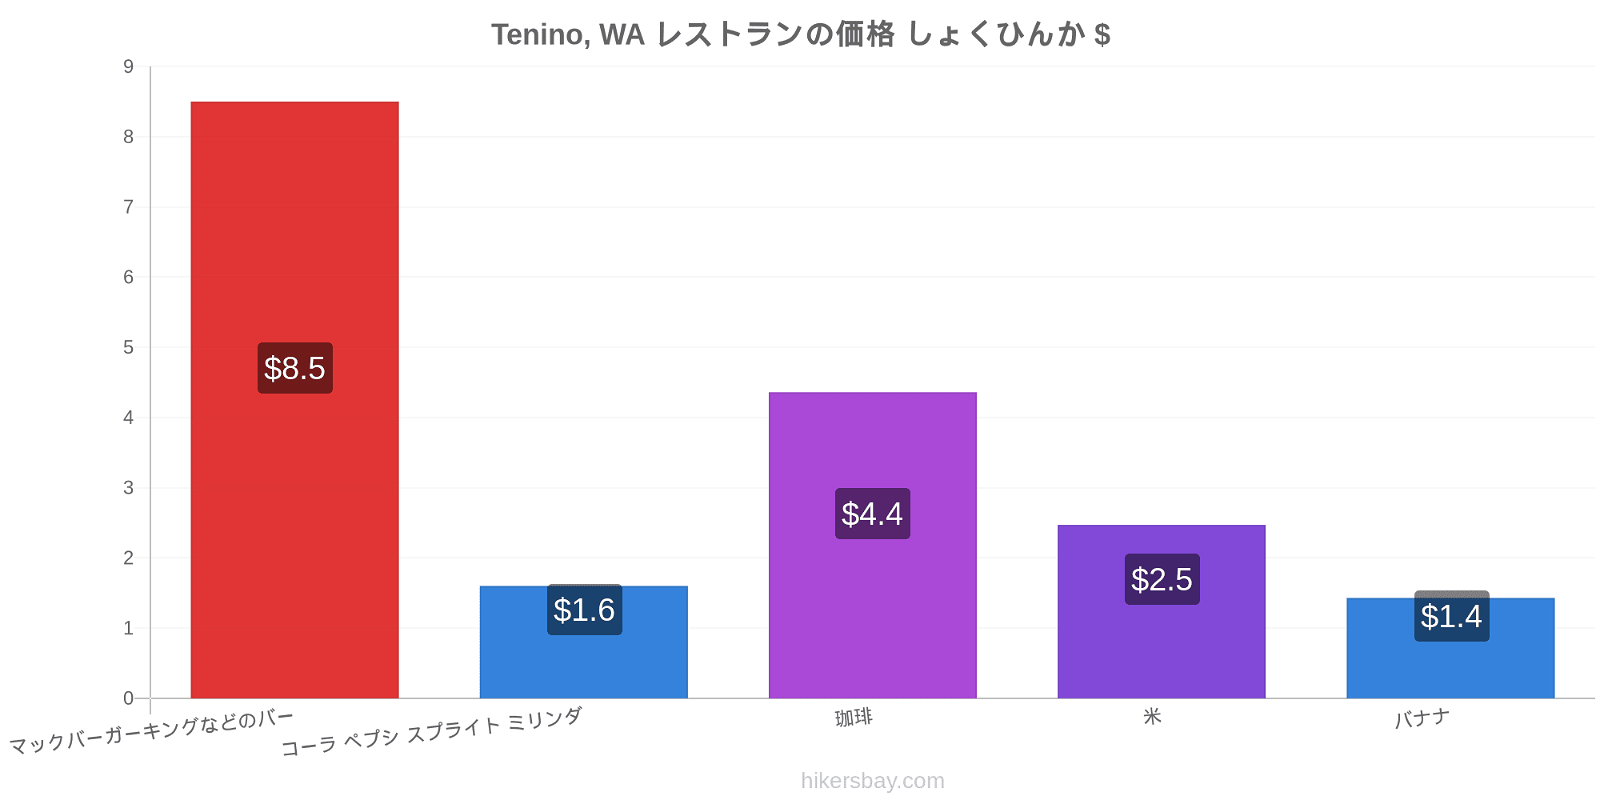 Tenino, WA 価格の変更 hikersbay.com